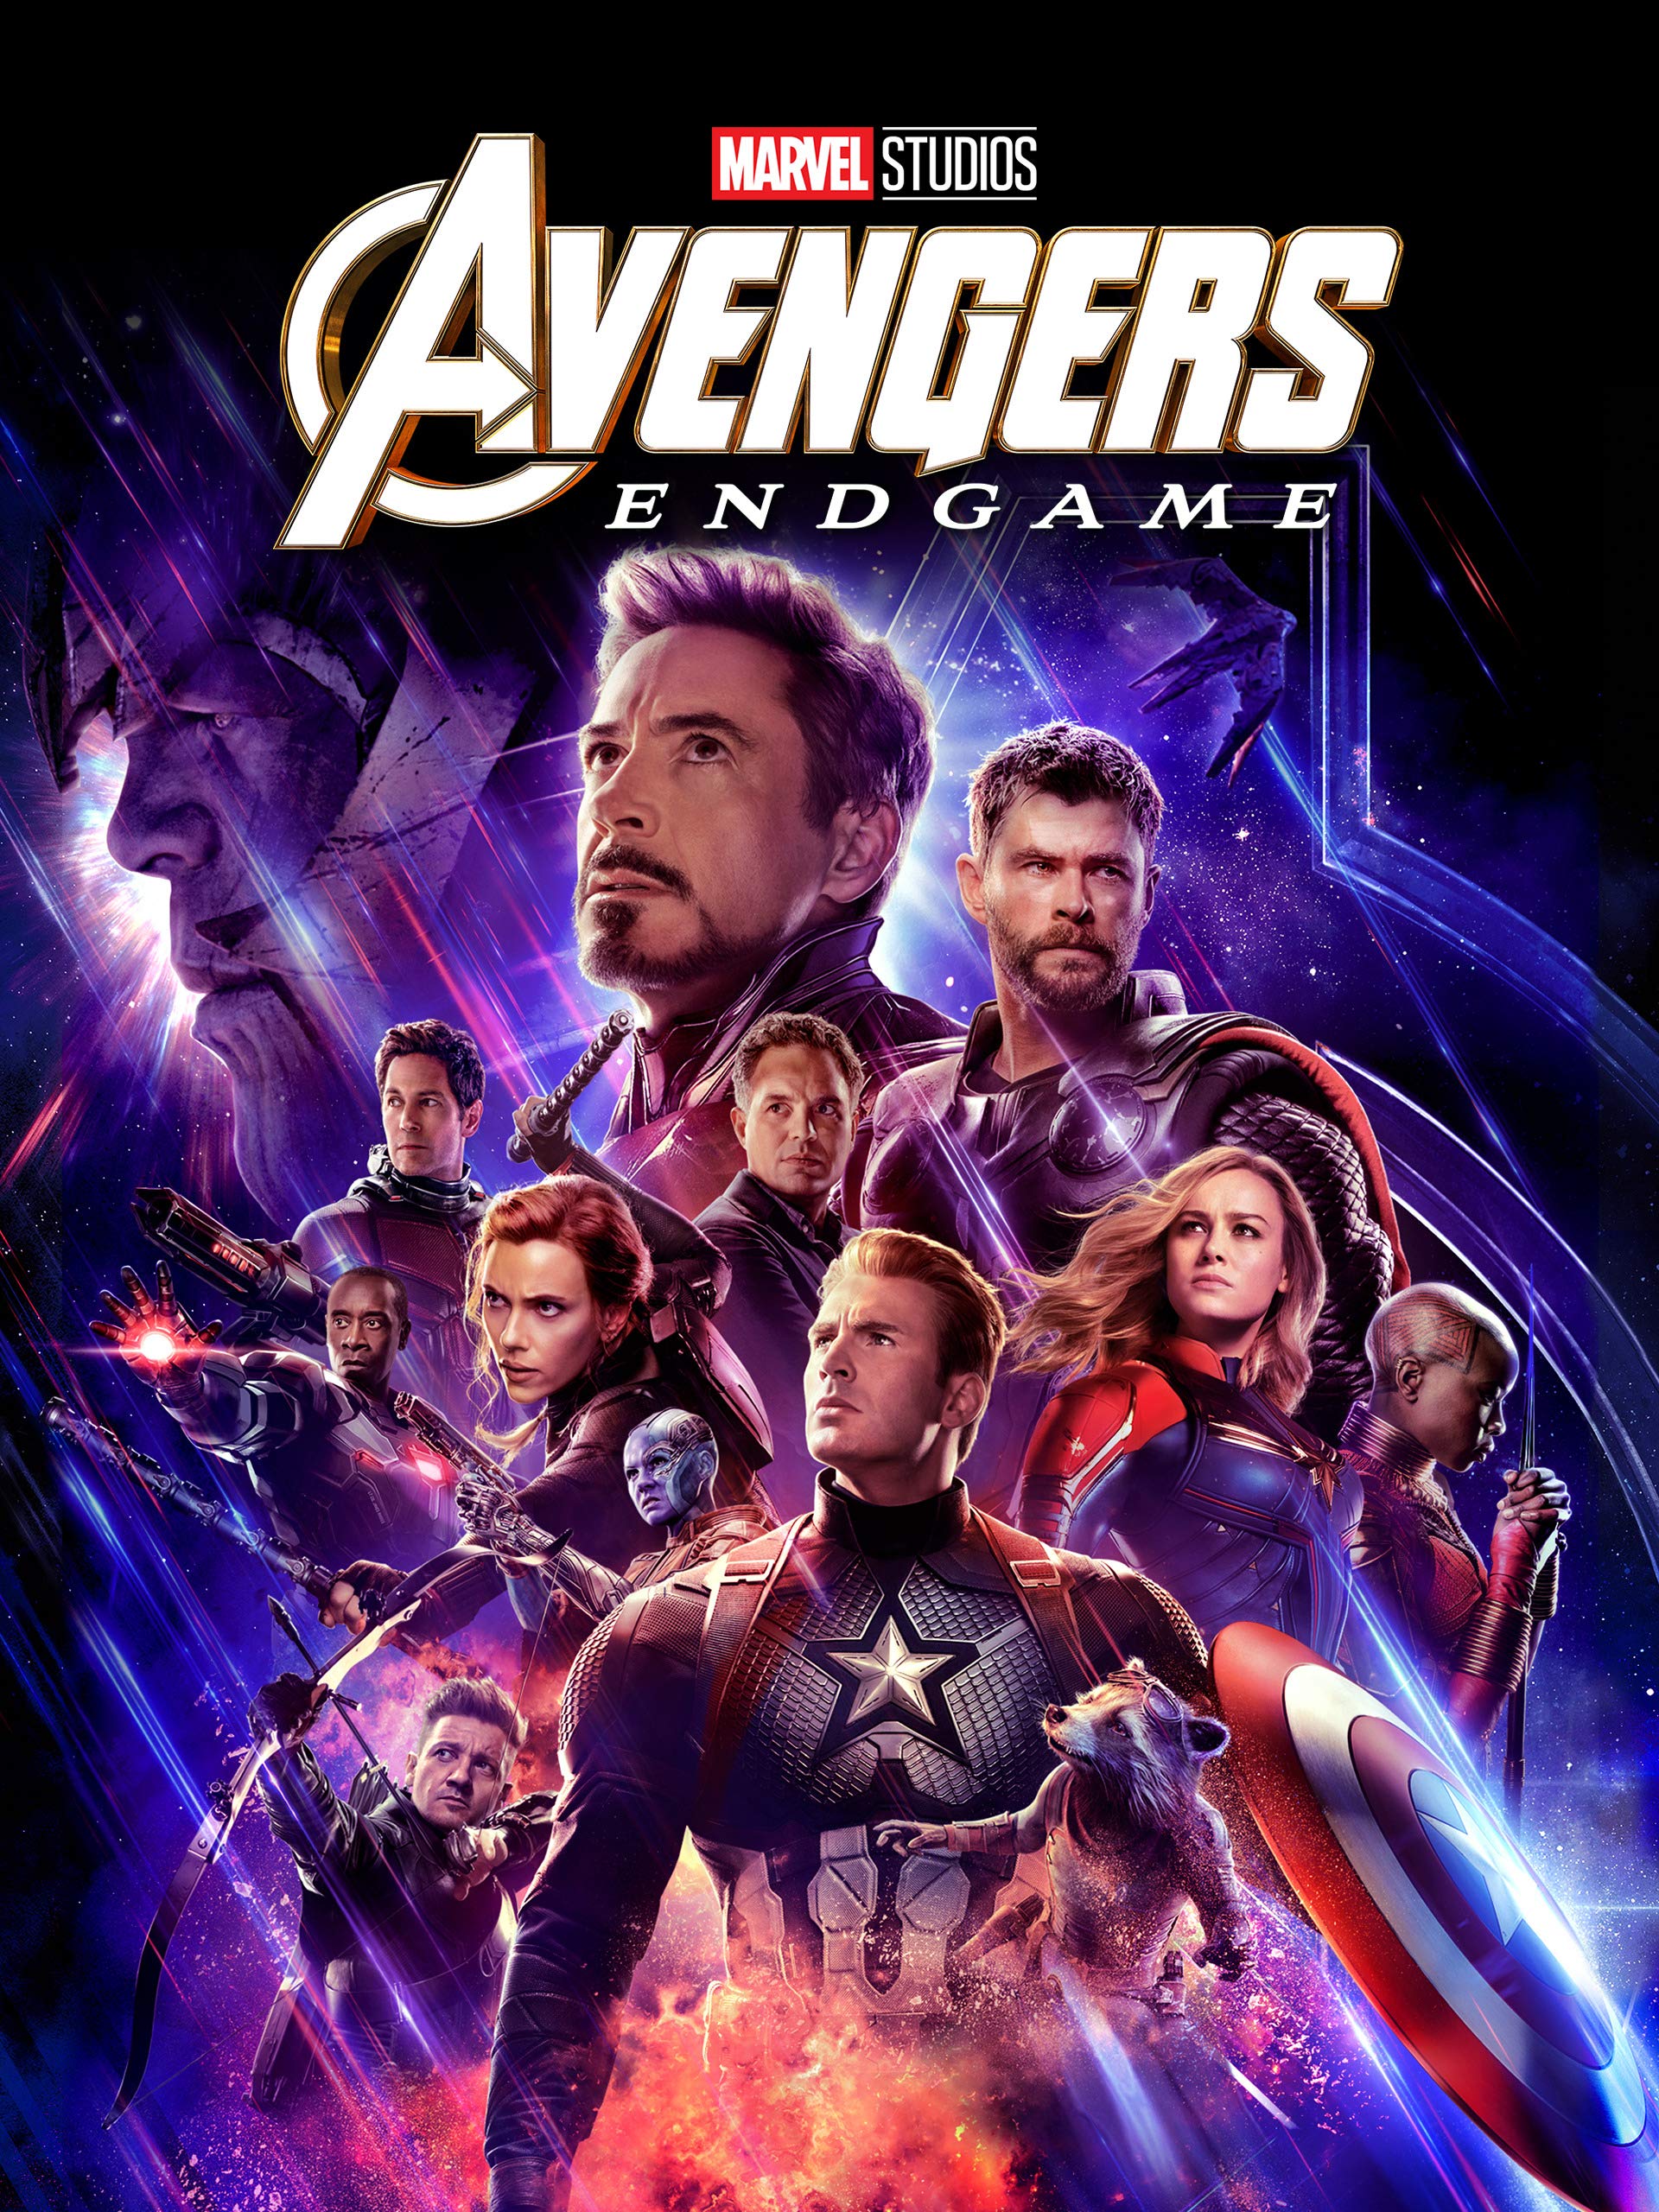 Avengers: Endgame 4K UHD Digital Review and Clips | EclipseMagazine